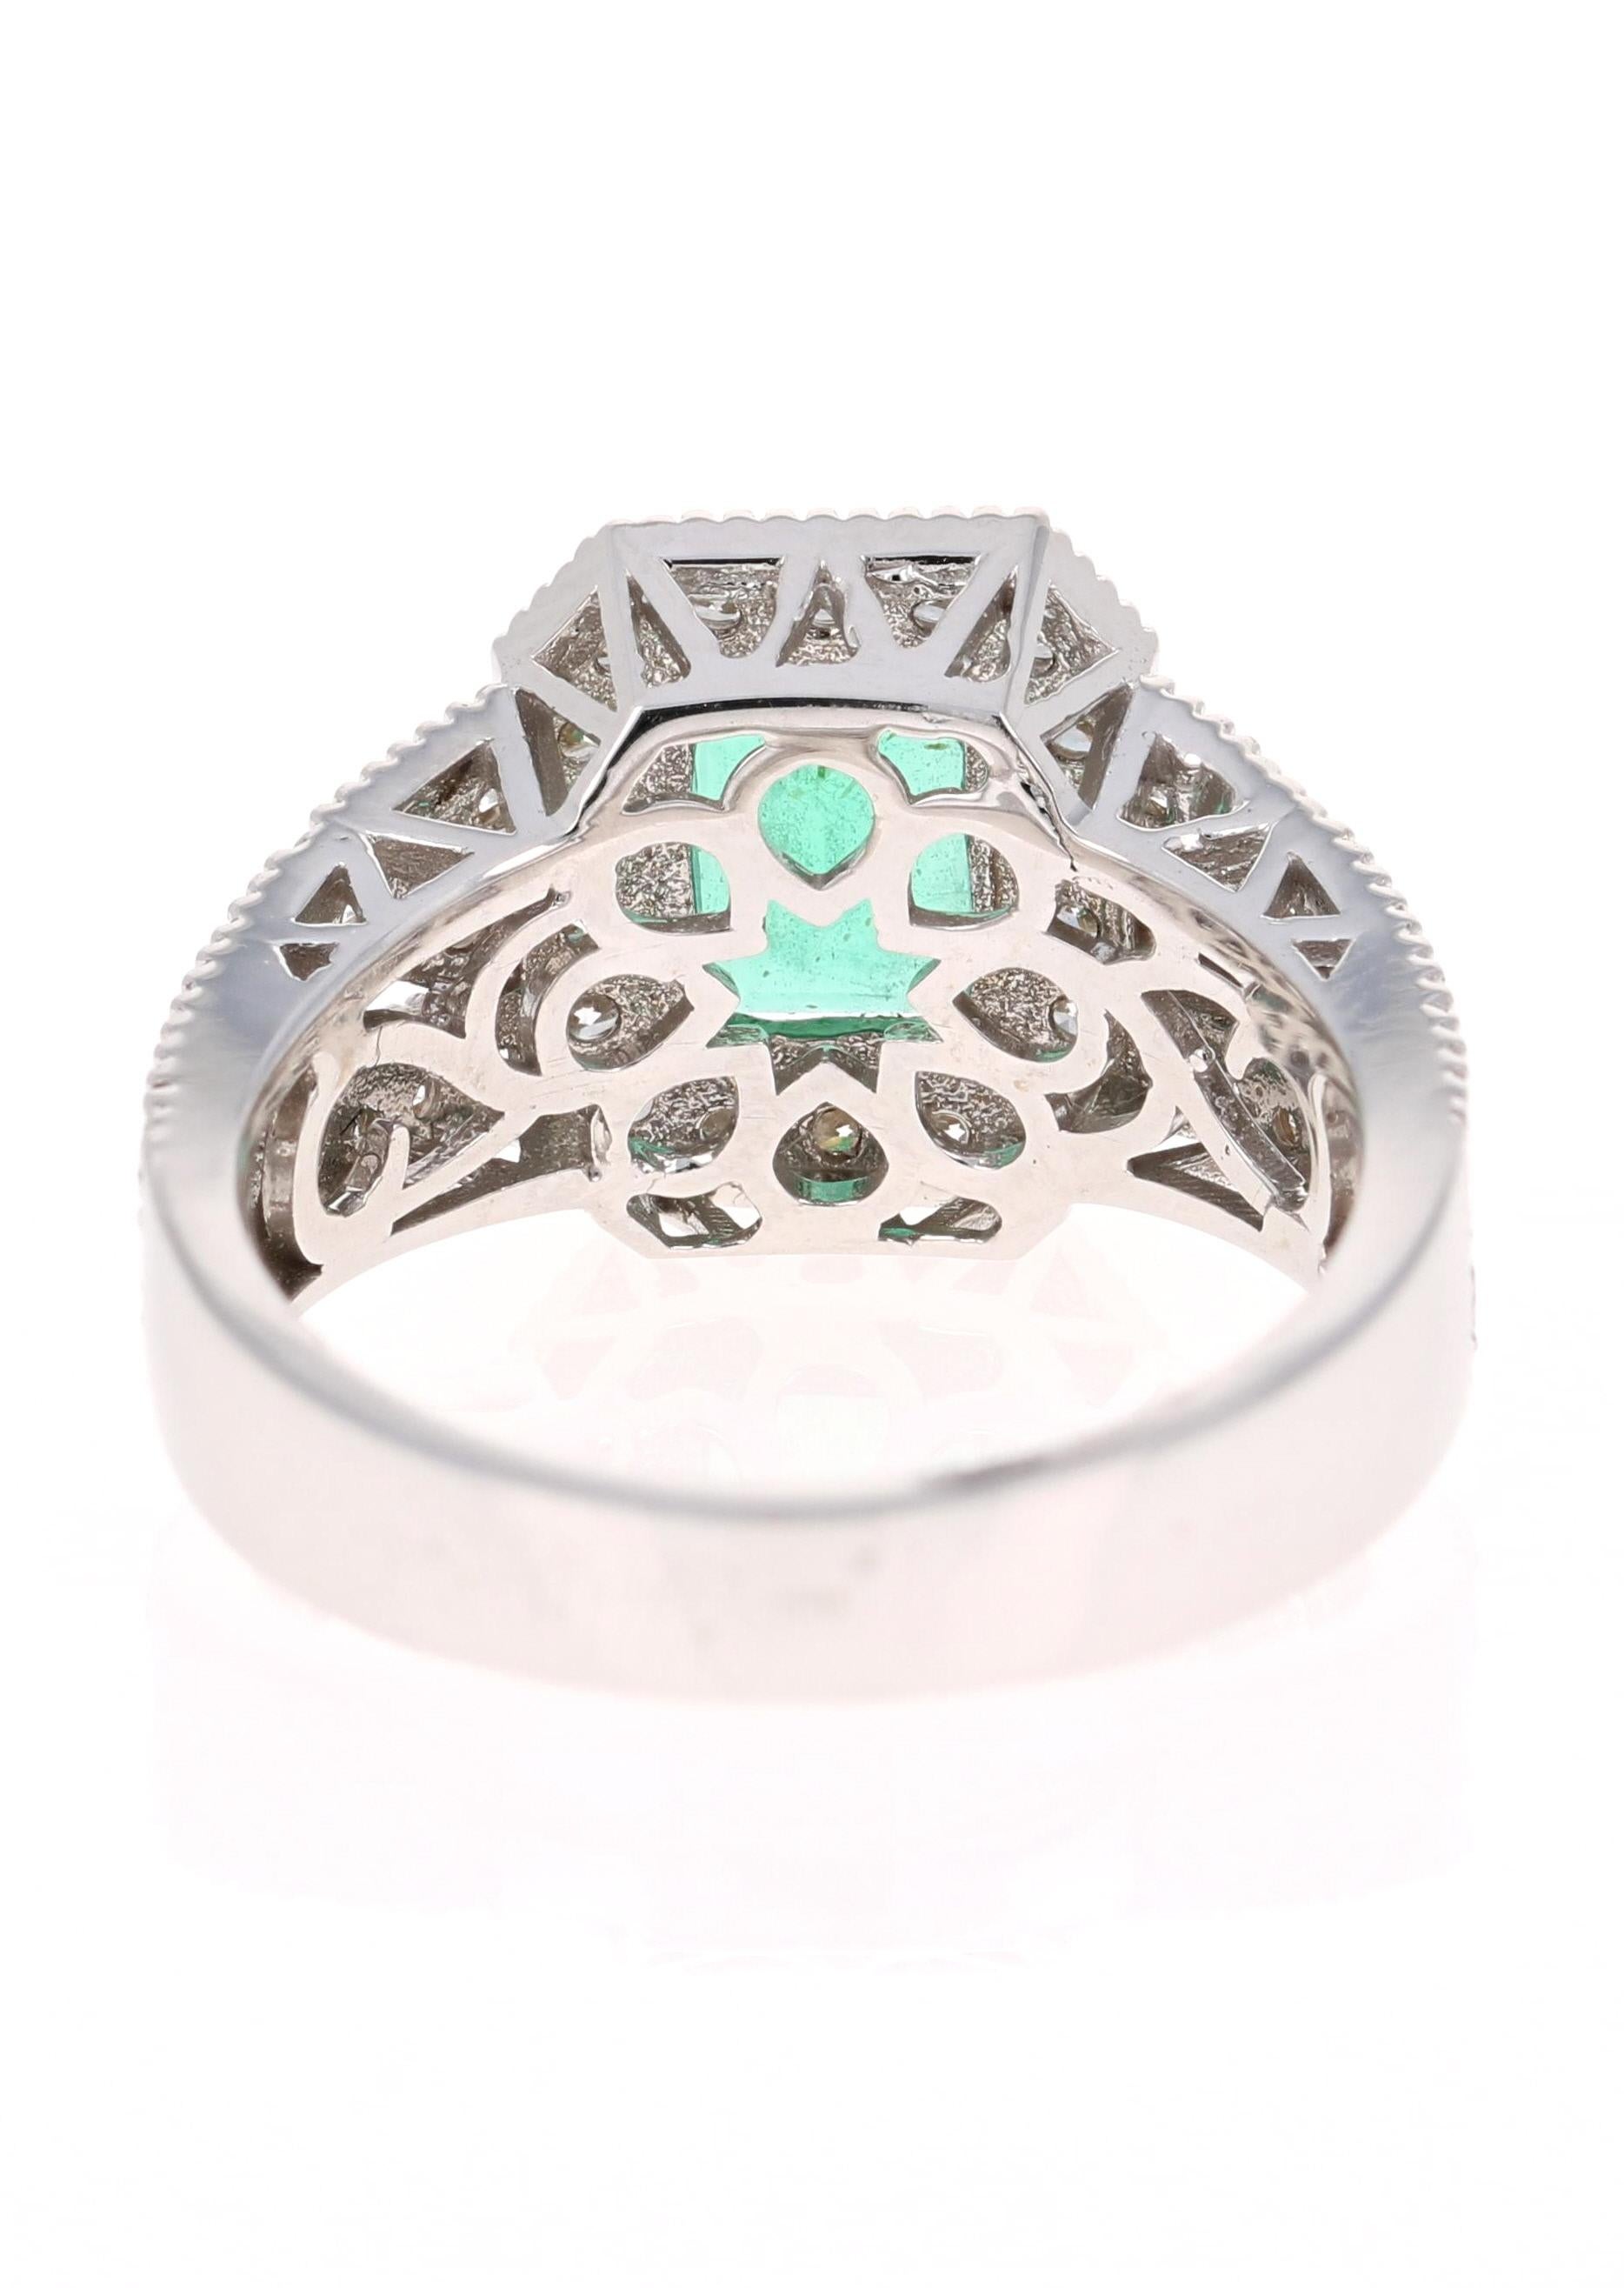 Emerald Cut GIA Certified 2.39 Carat Emerald Diamond 18 Karat White Gold Ring For Sale